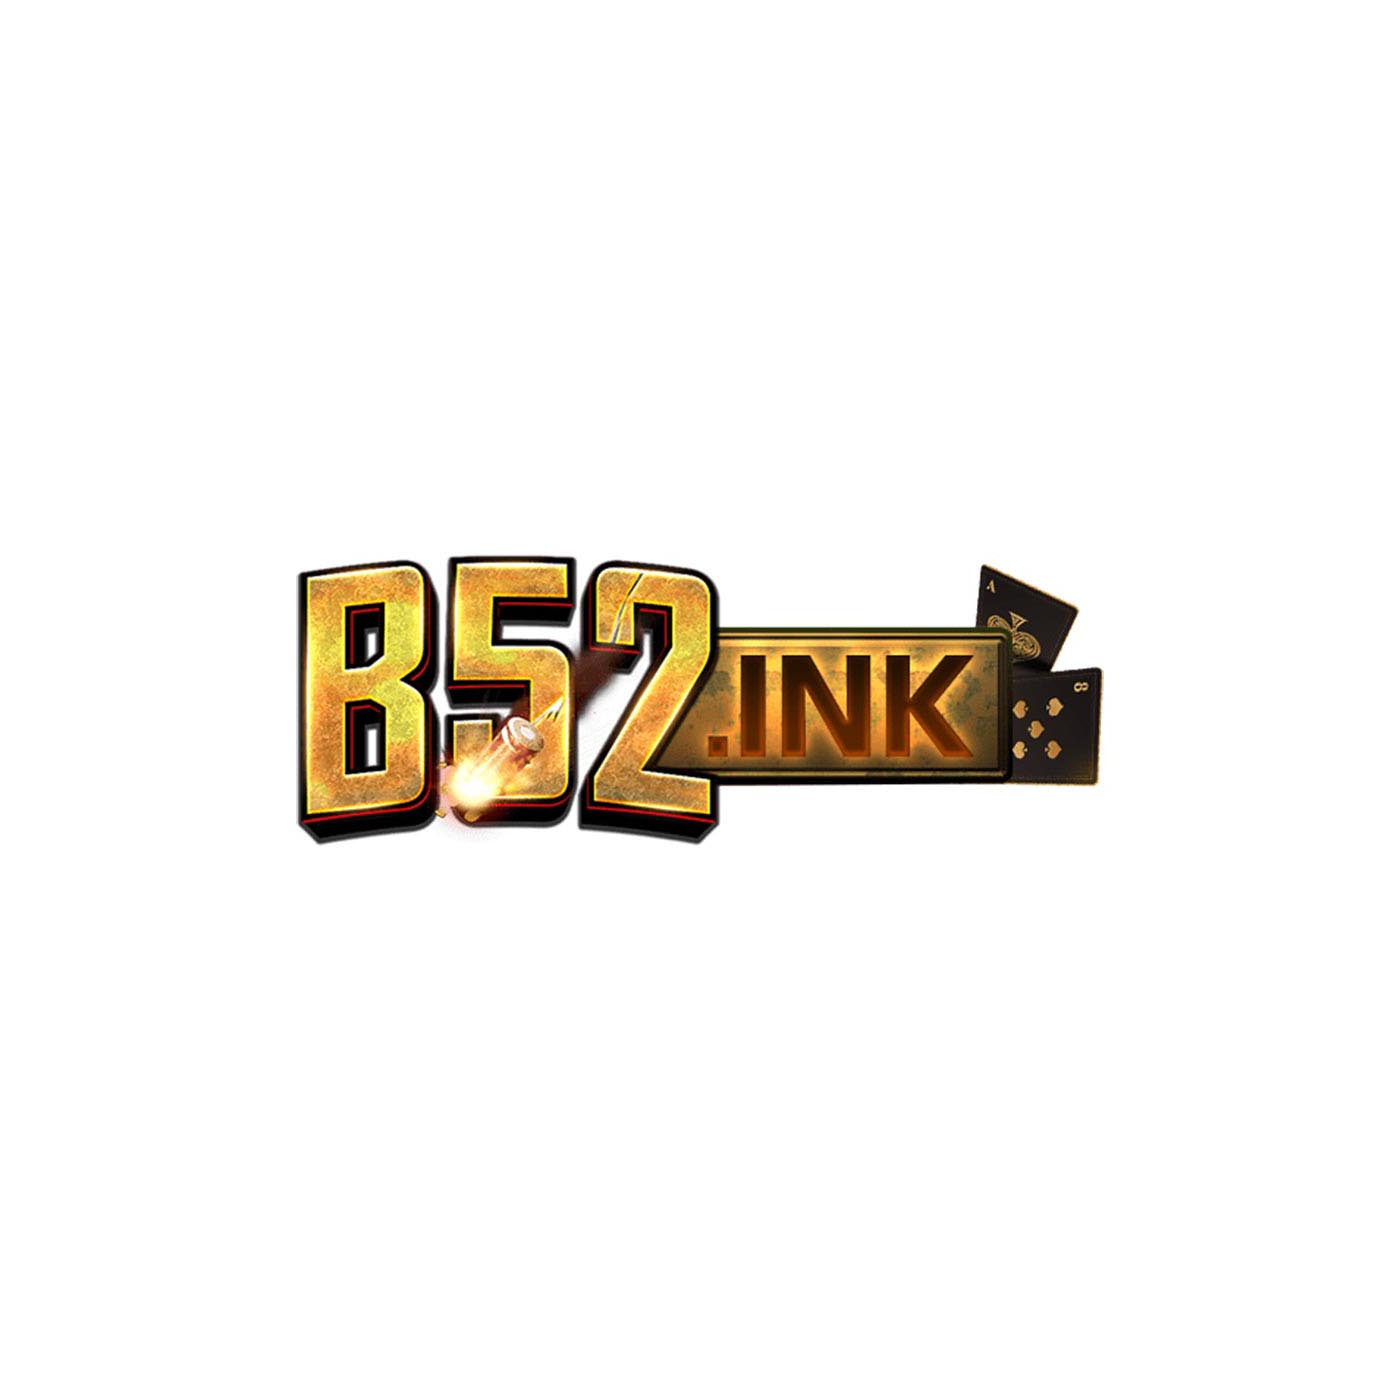 b52ink